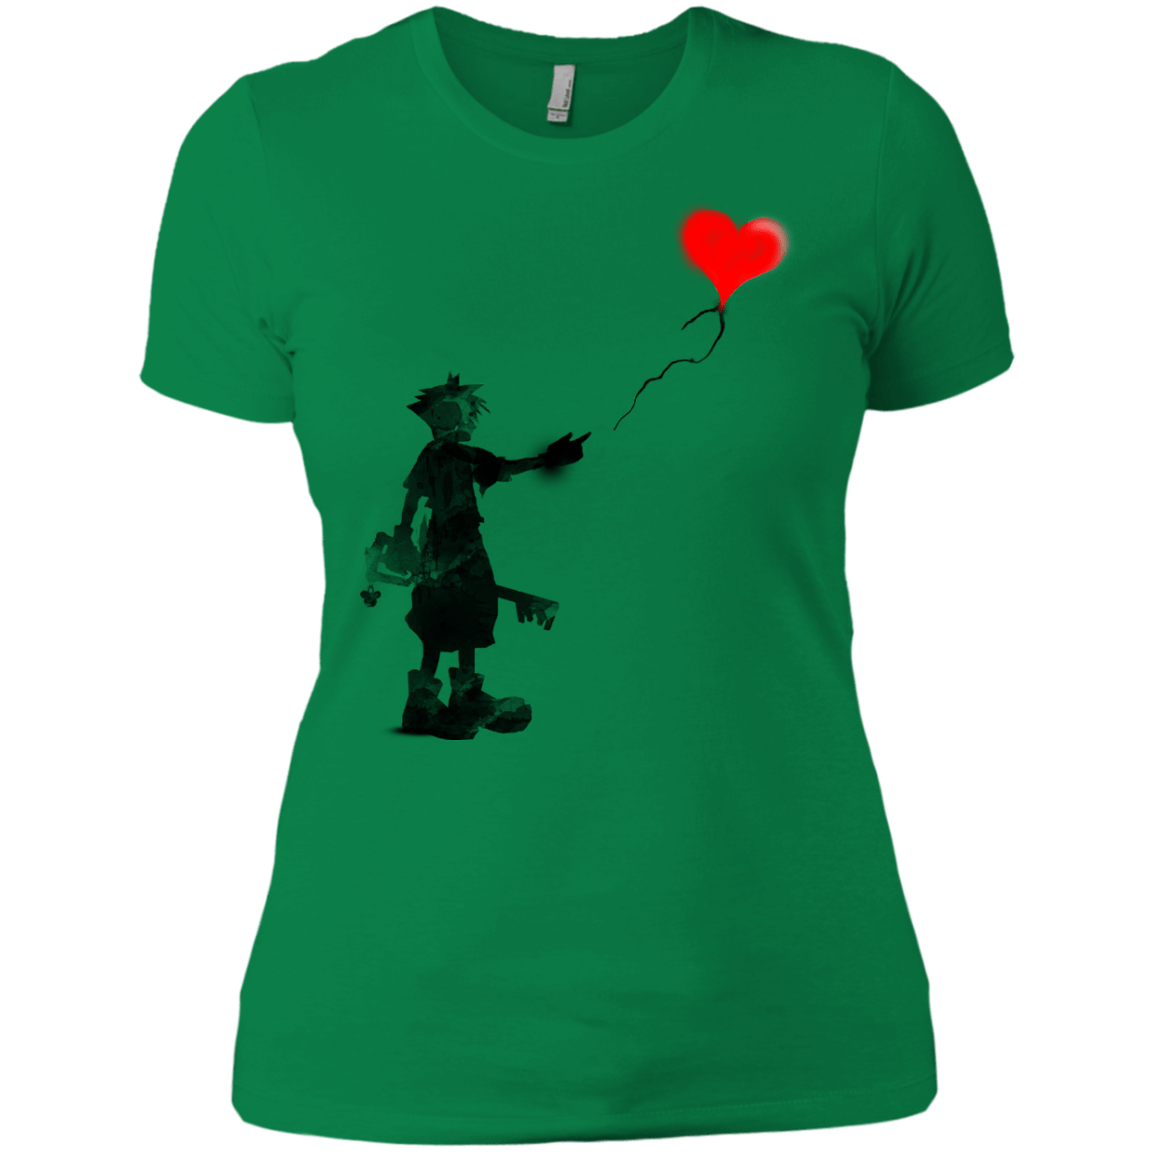 T-Shirts Kelly Green / X-Small Boy and Balloon Women's Premium T-Shirt